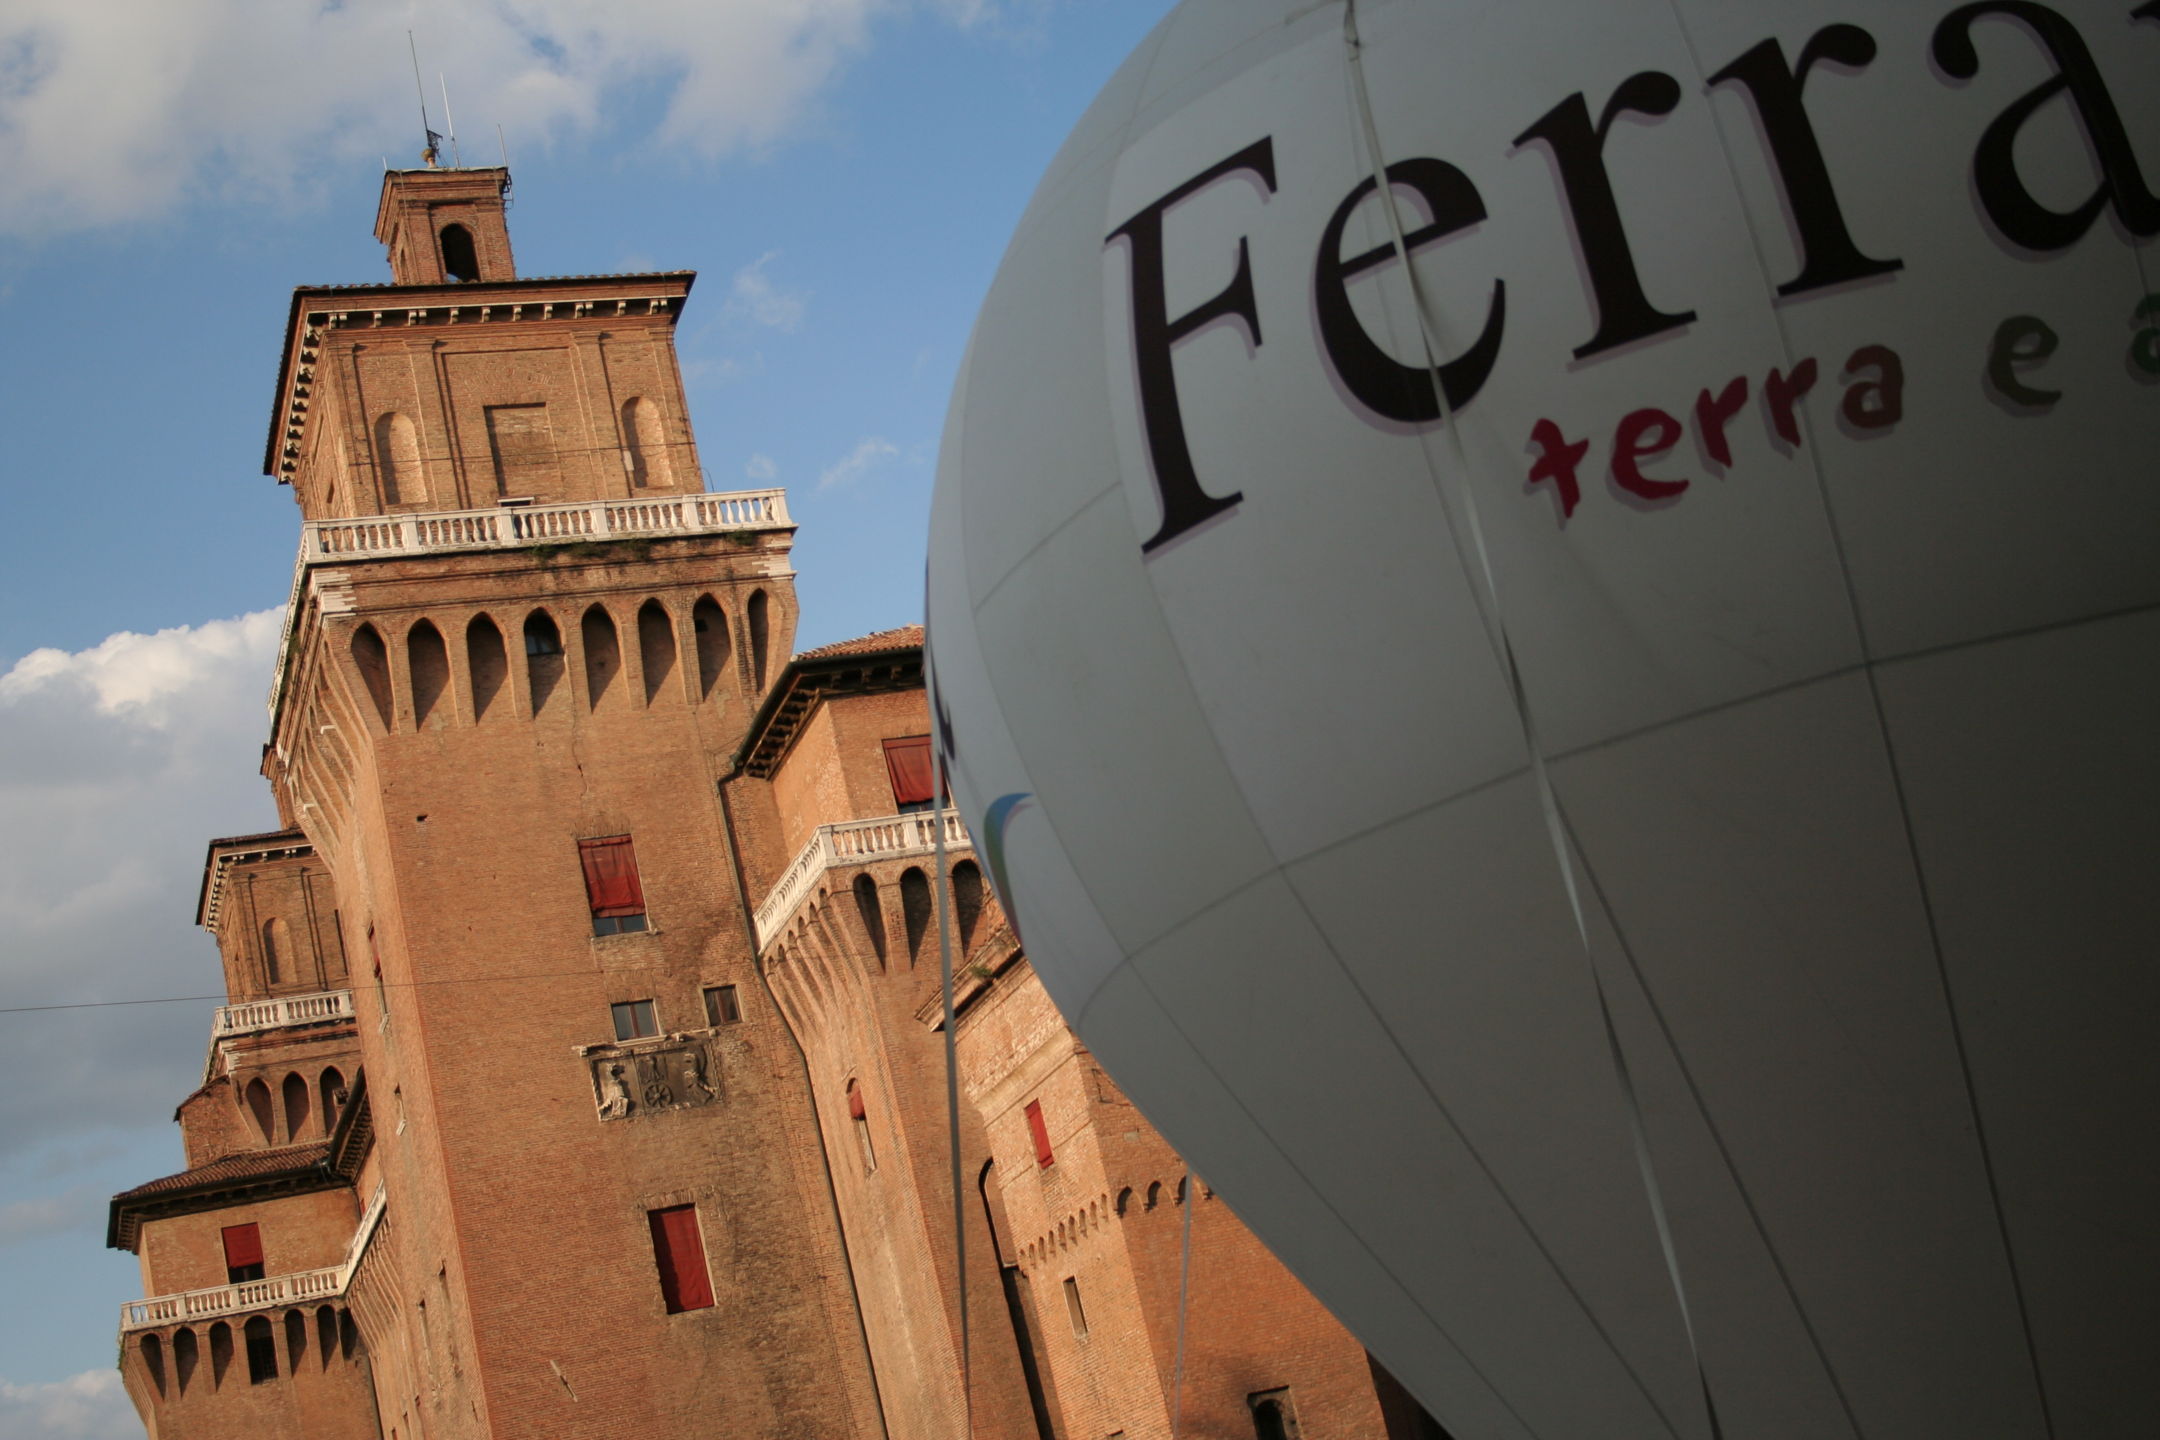 Ferrara - Castello Estense